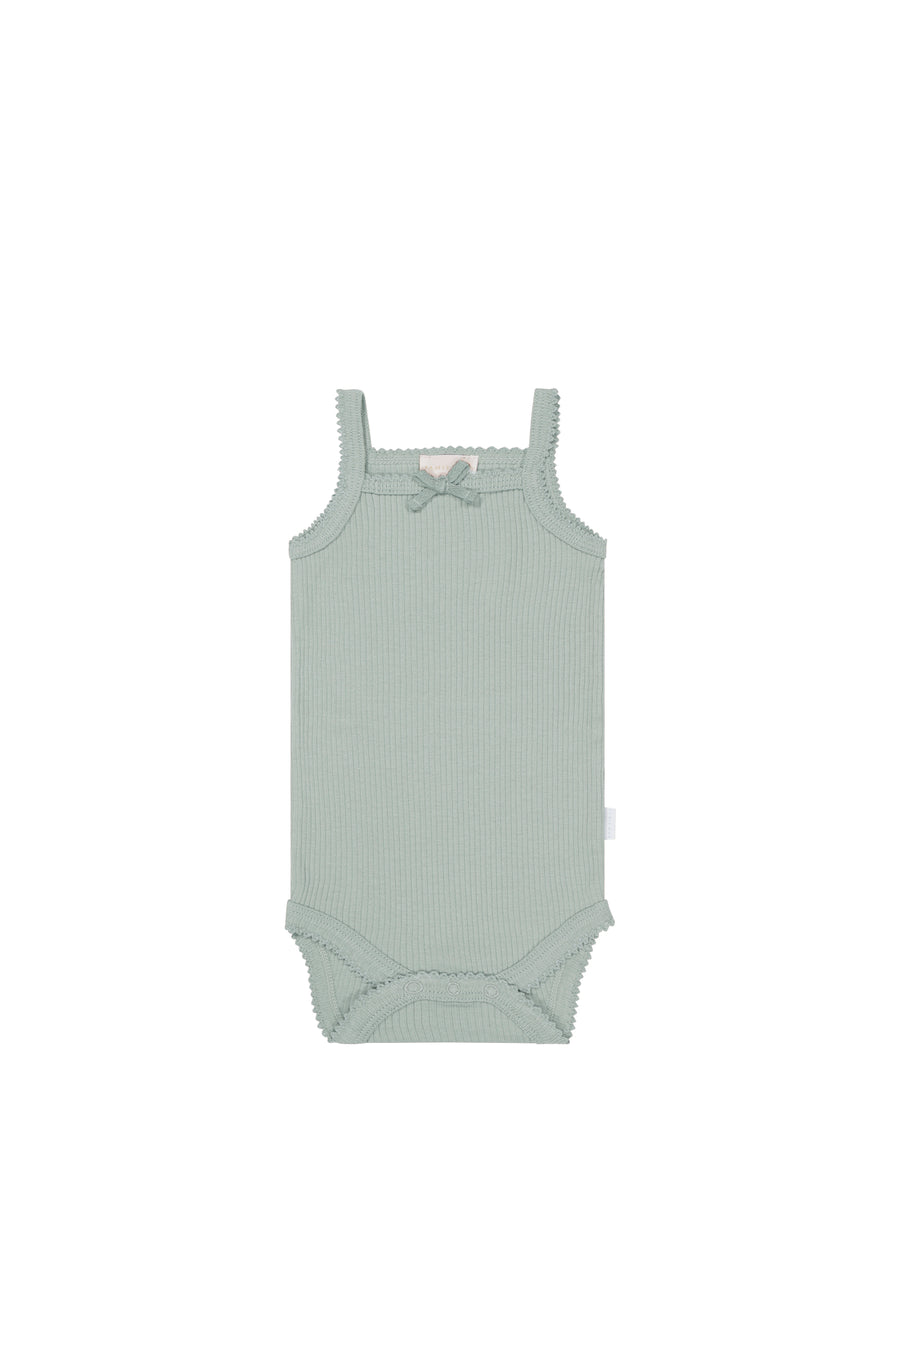 Organic Cotton Modal Singlet Bodysuit - Ocean Spray Childrens Bodysuit from Jamie Kay USA